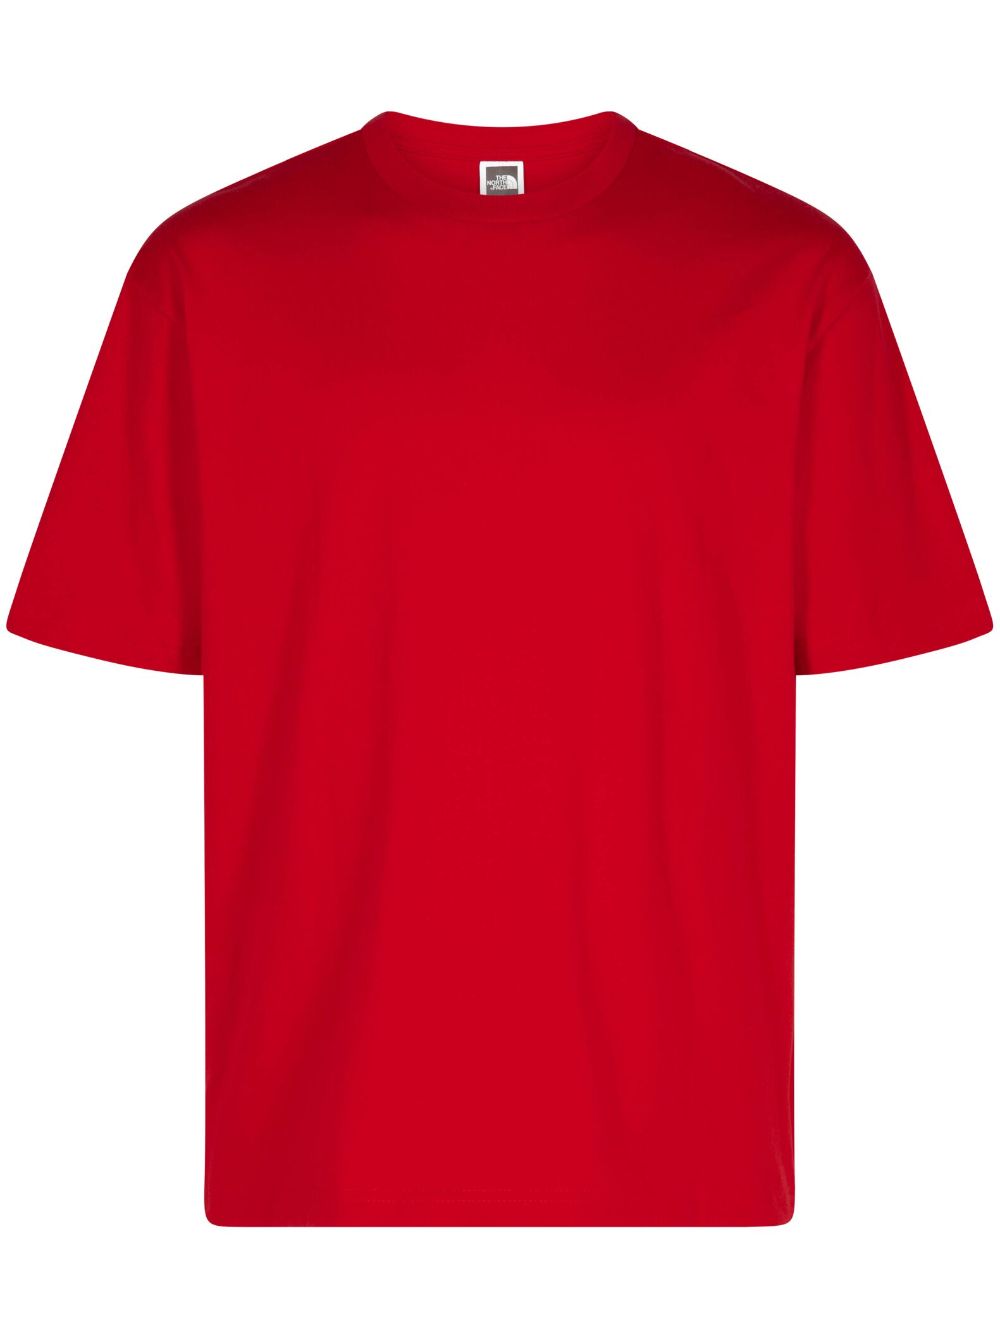 Supreme x The North Face "Red" T-shirt von Supreme